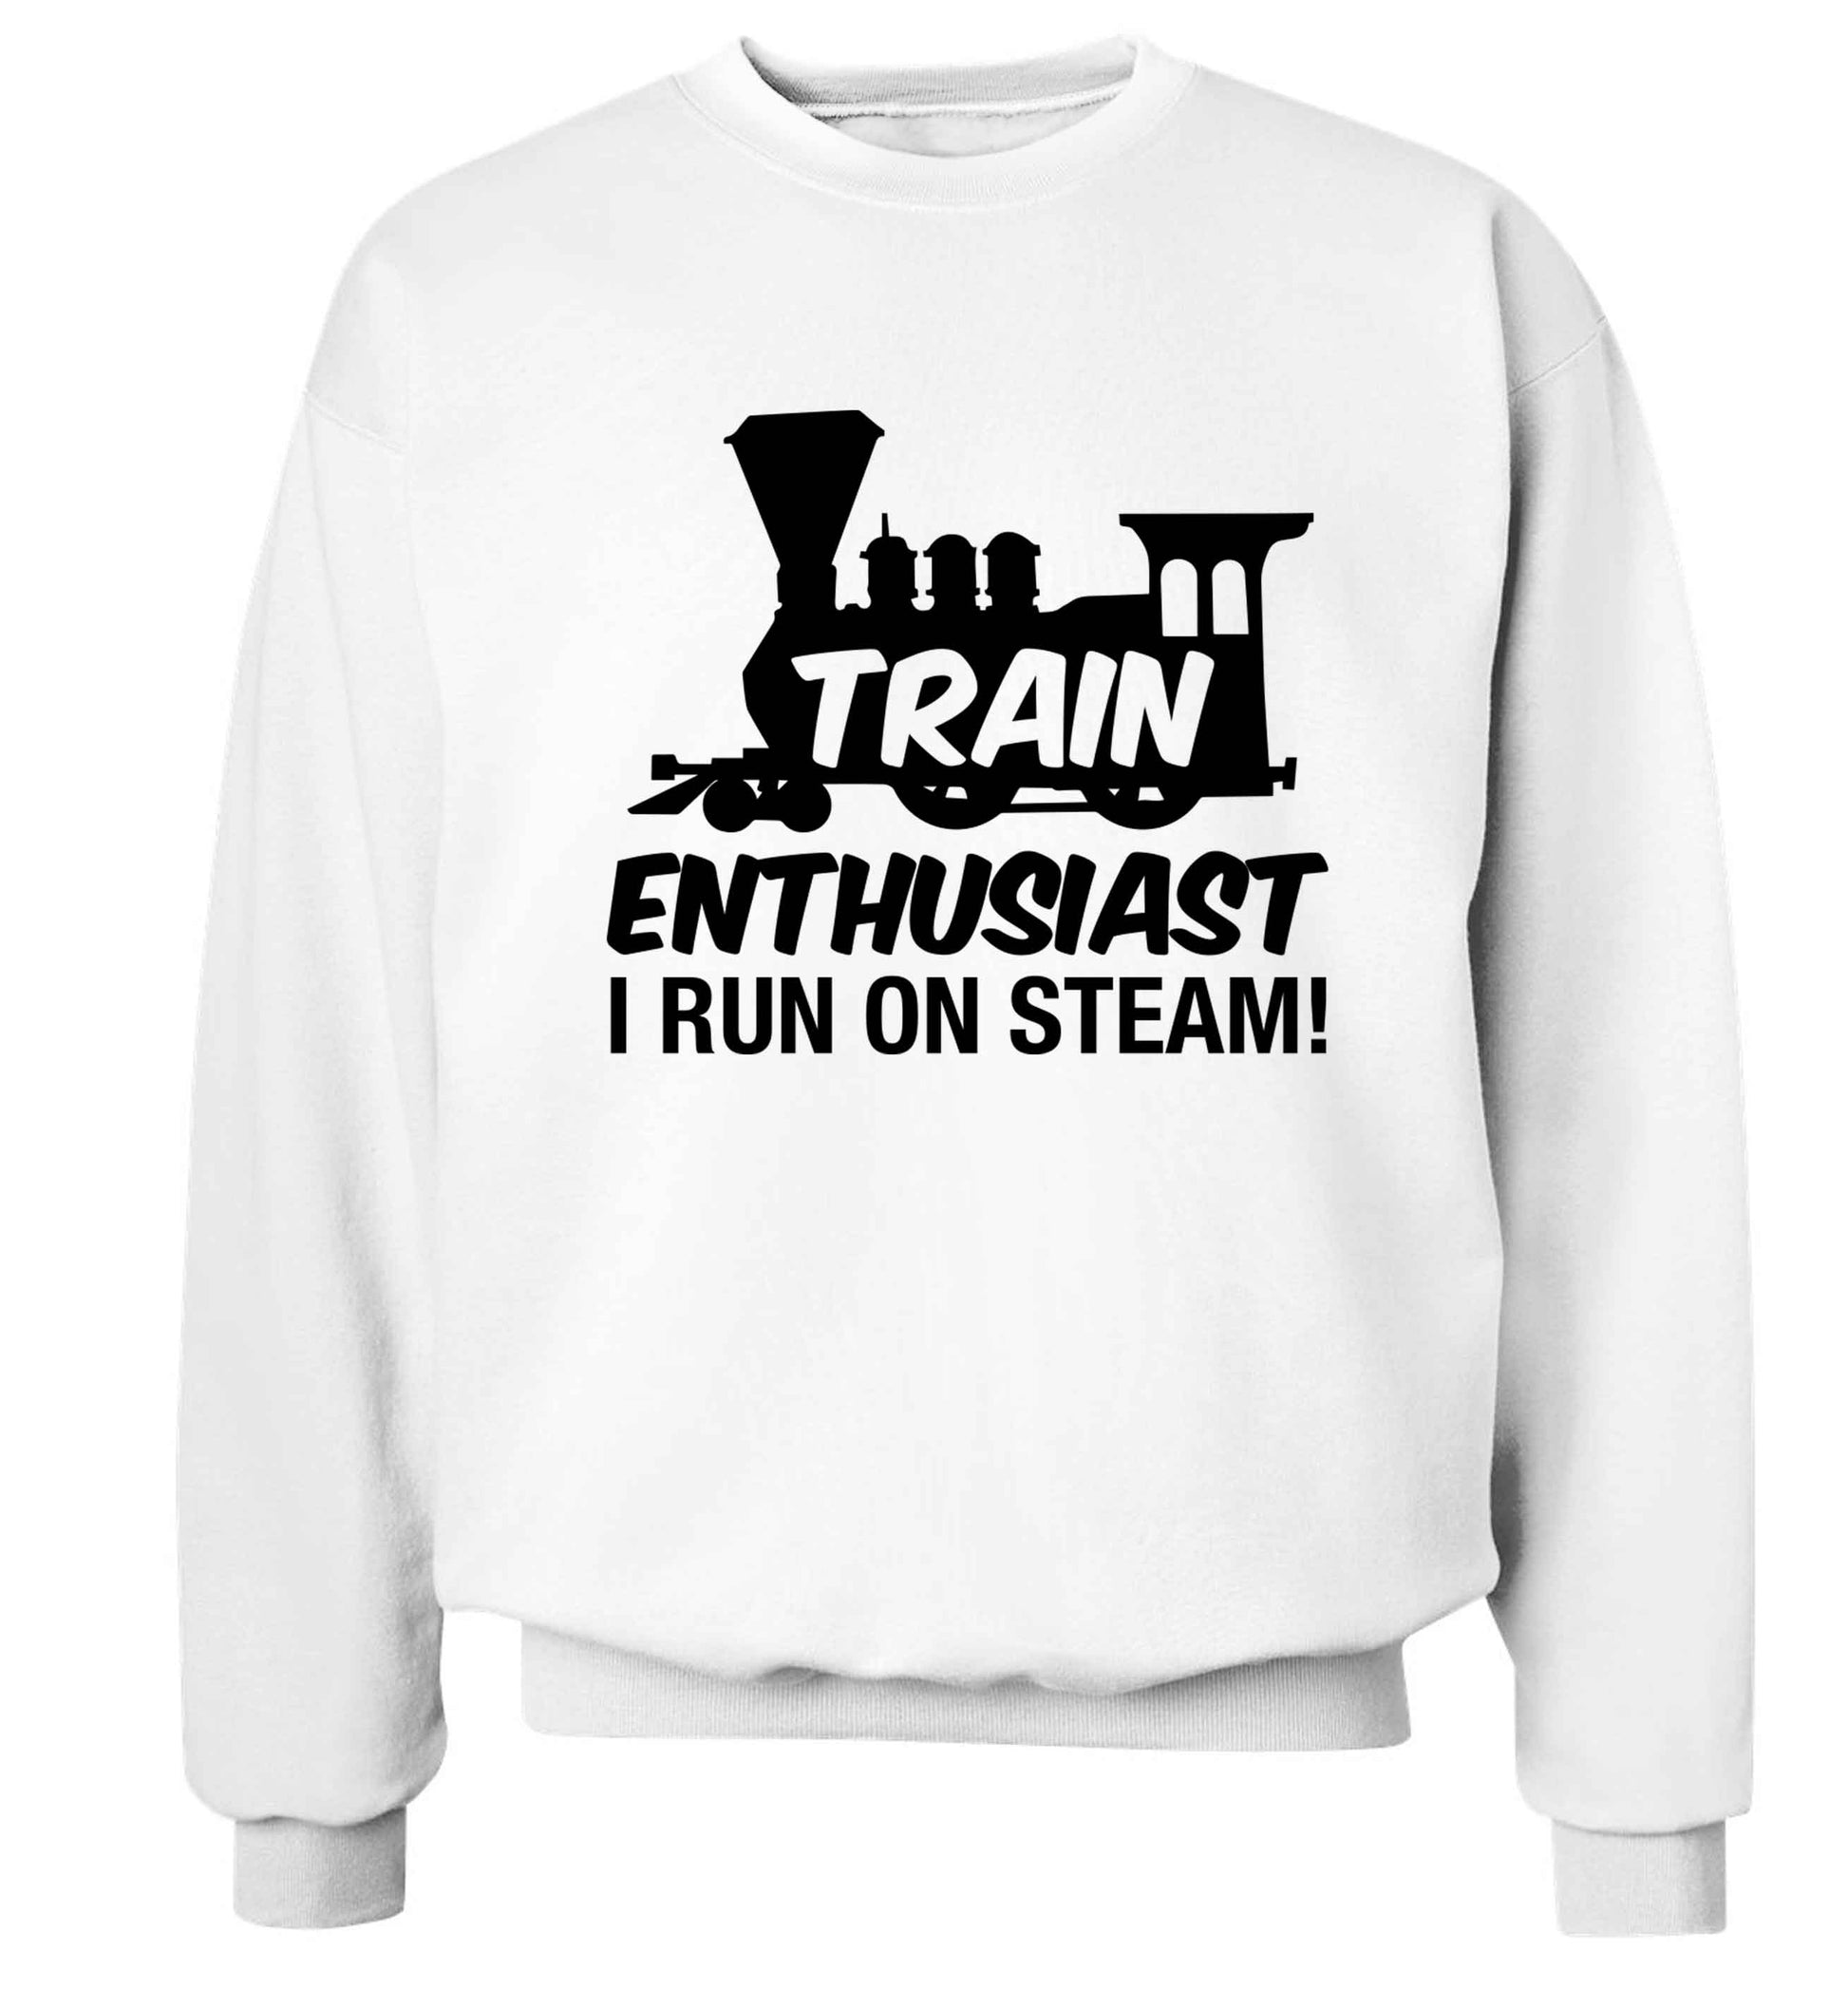 Train enthusiast I run on steam Adult's unisex white Sweater 2XL